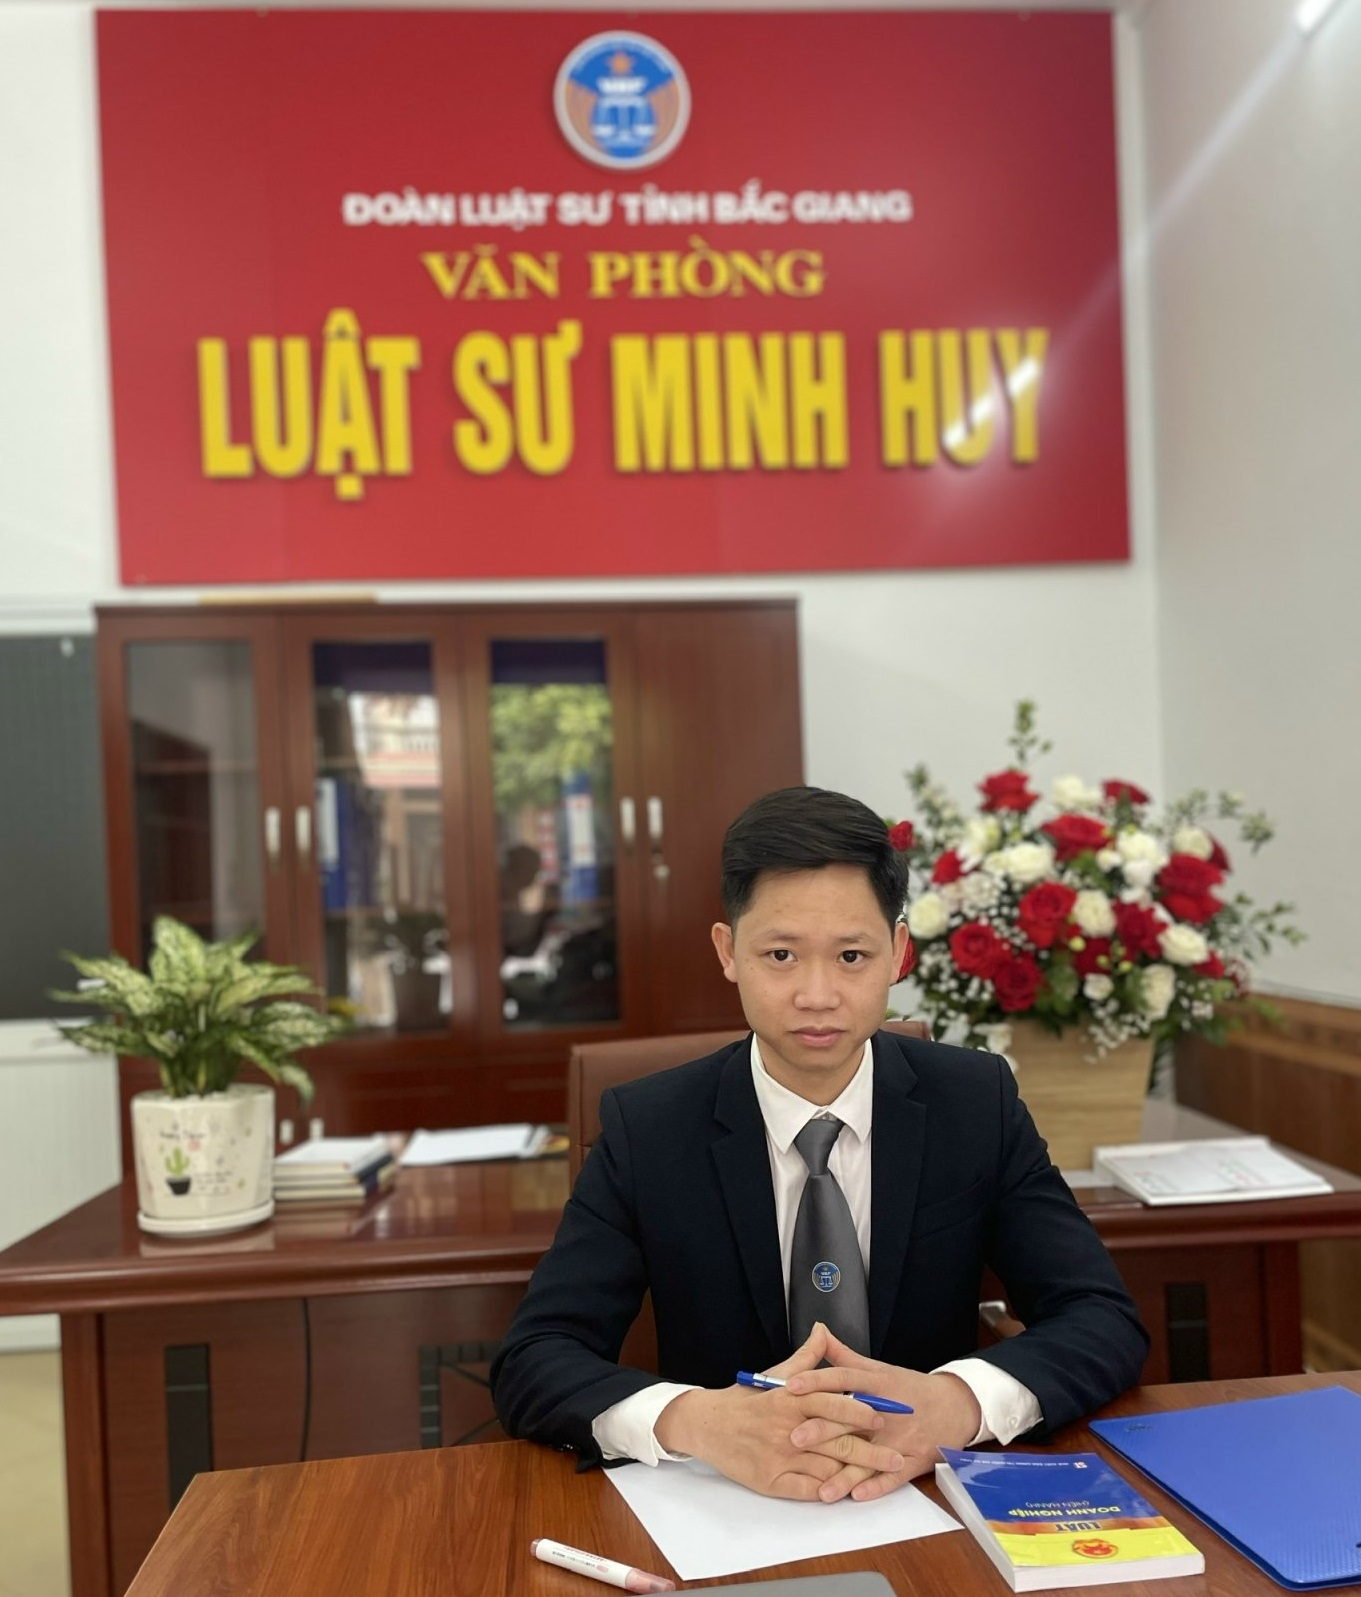 Luật sư Minh Huy